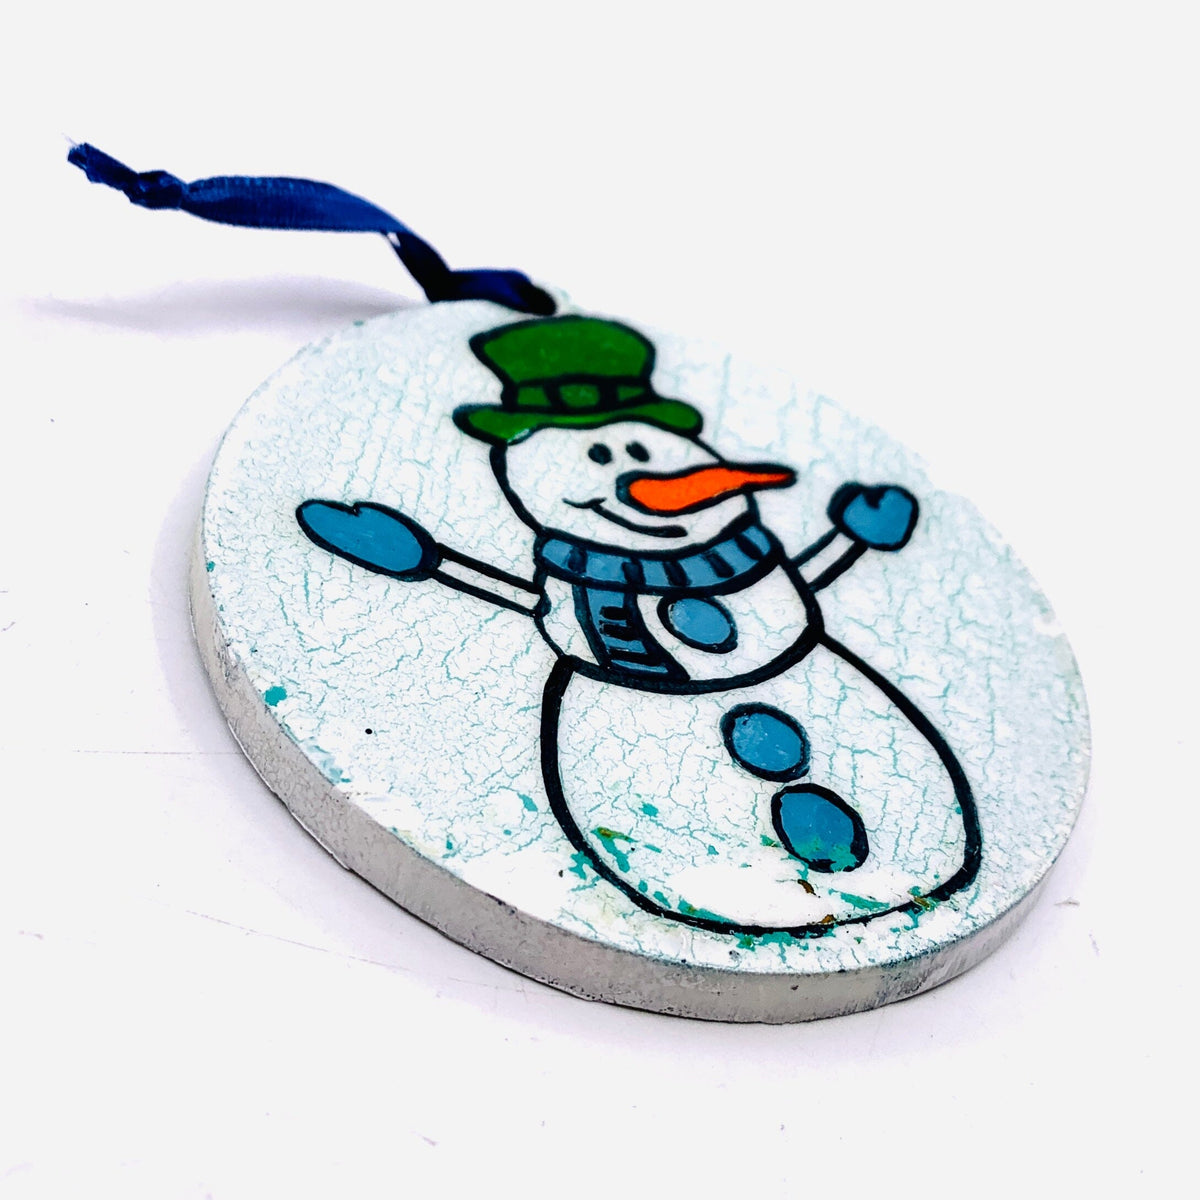 Recycled Wood Ornament, Hugging Snowman Ornament Pam Peana 